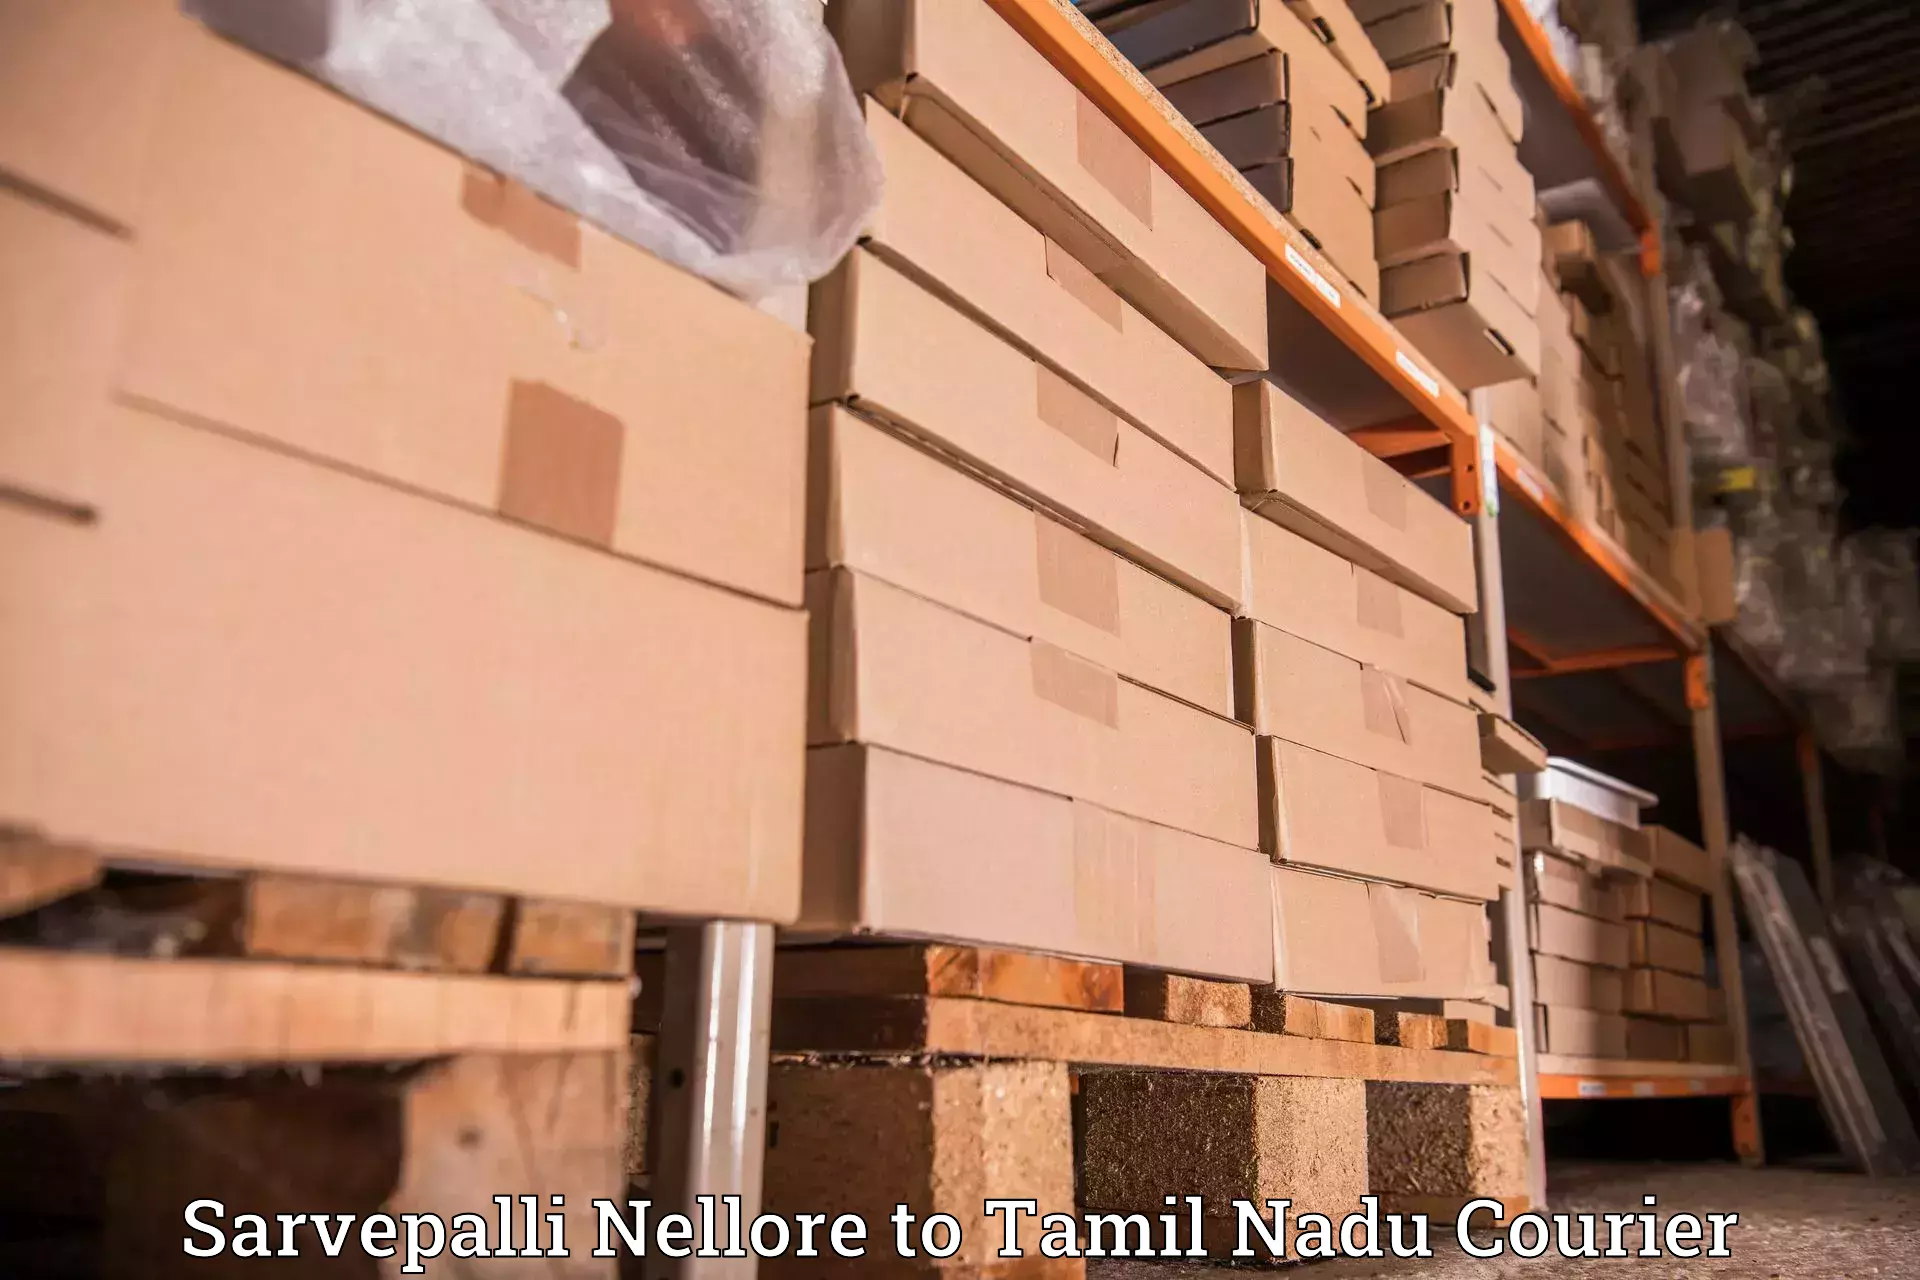 Business delivery service Sarvepalli Nellore to Tamil Nadu